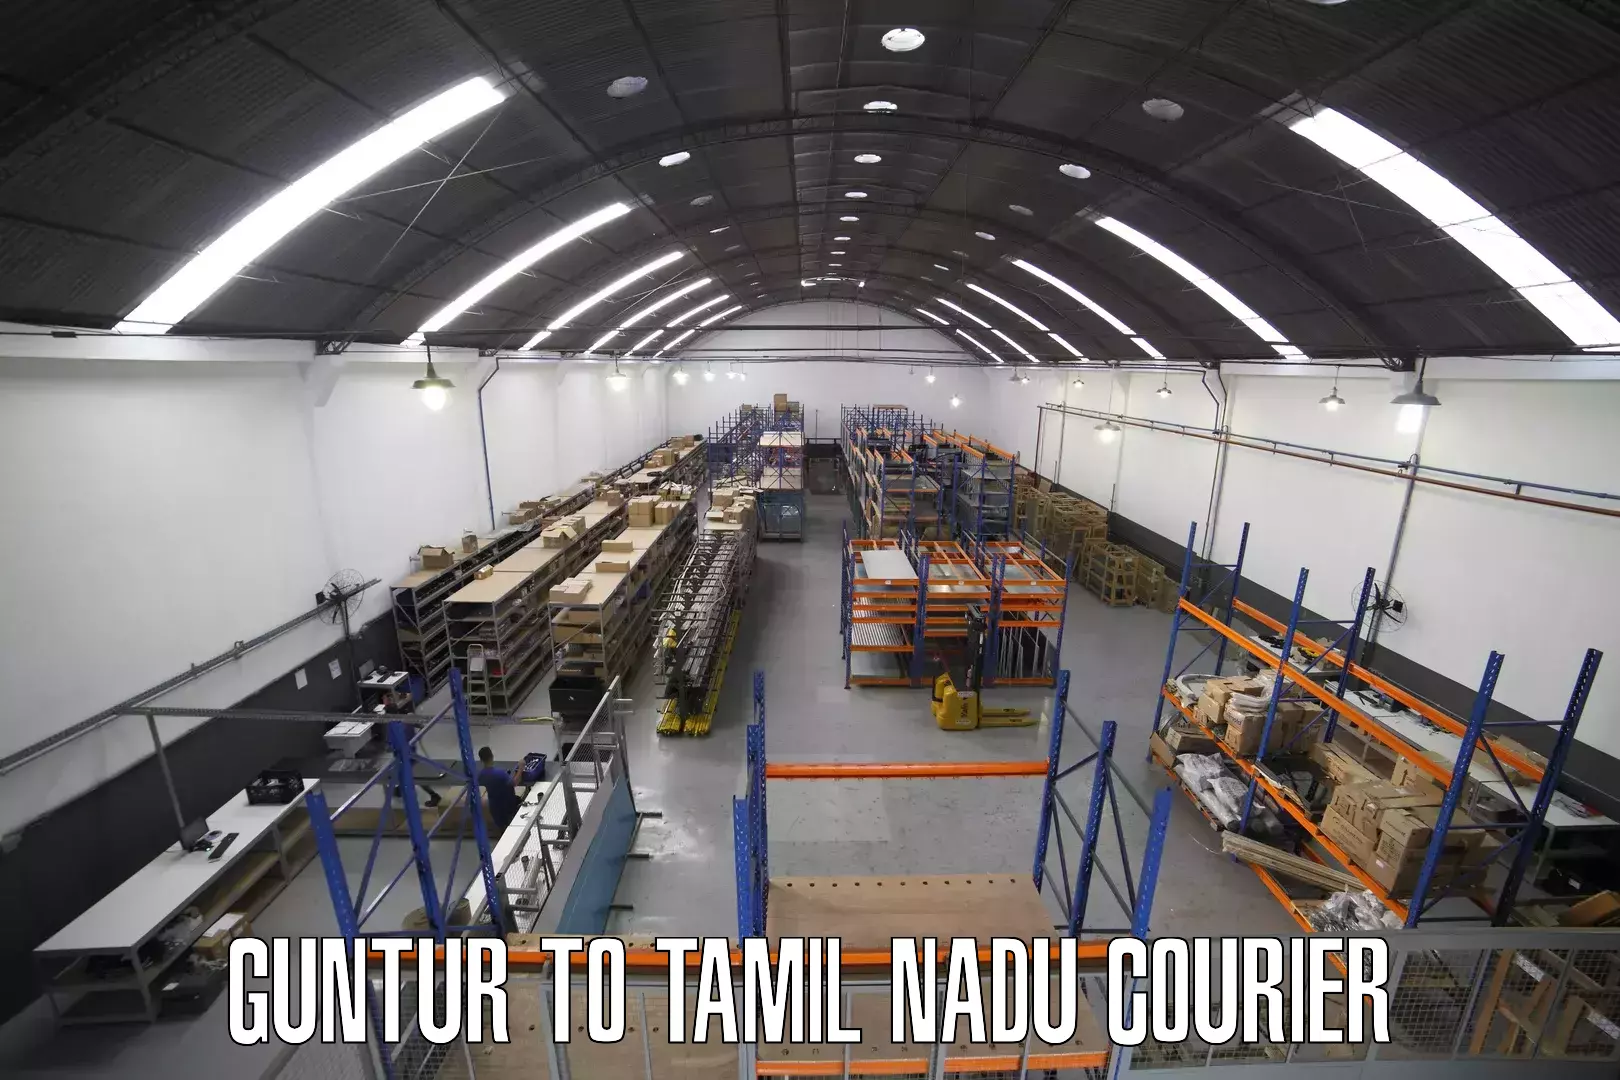 Nationwide delivery network Guntur to Ramanathapuram